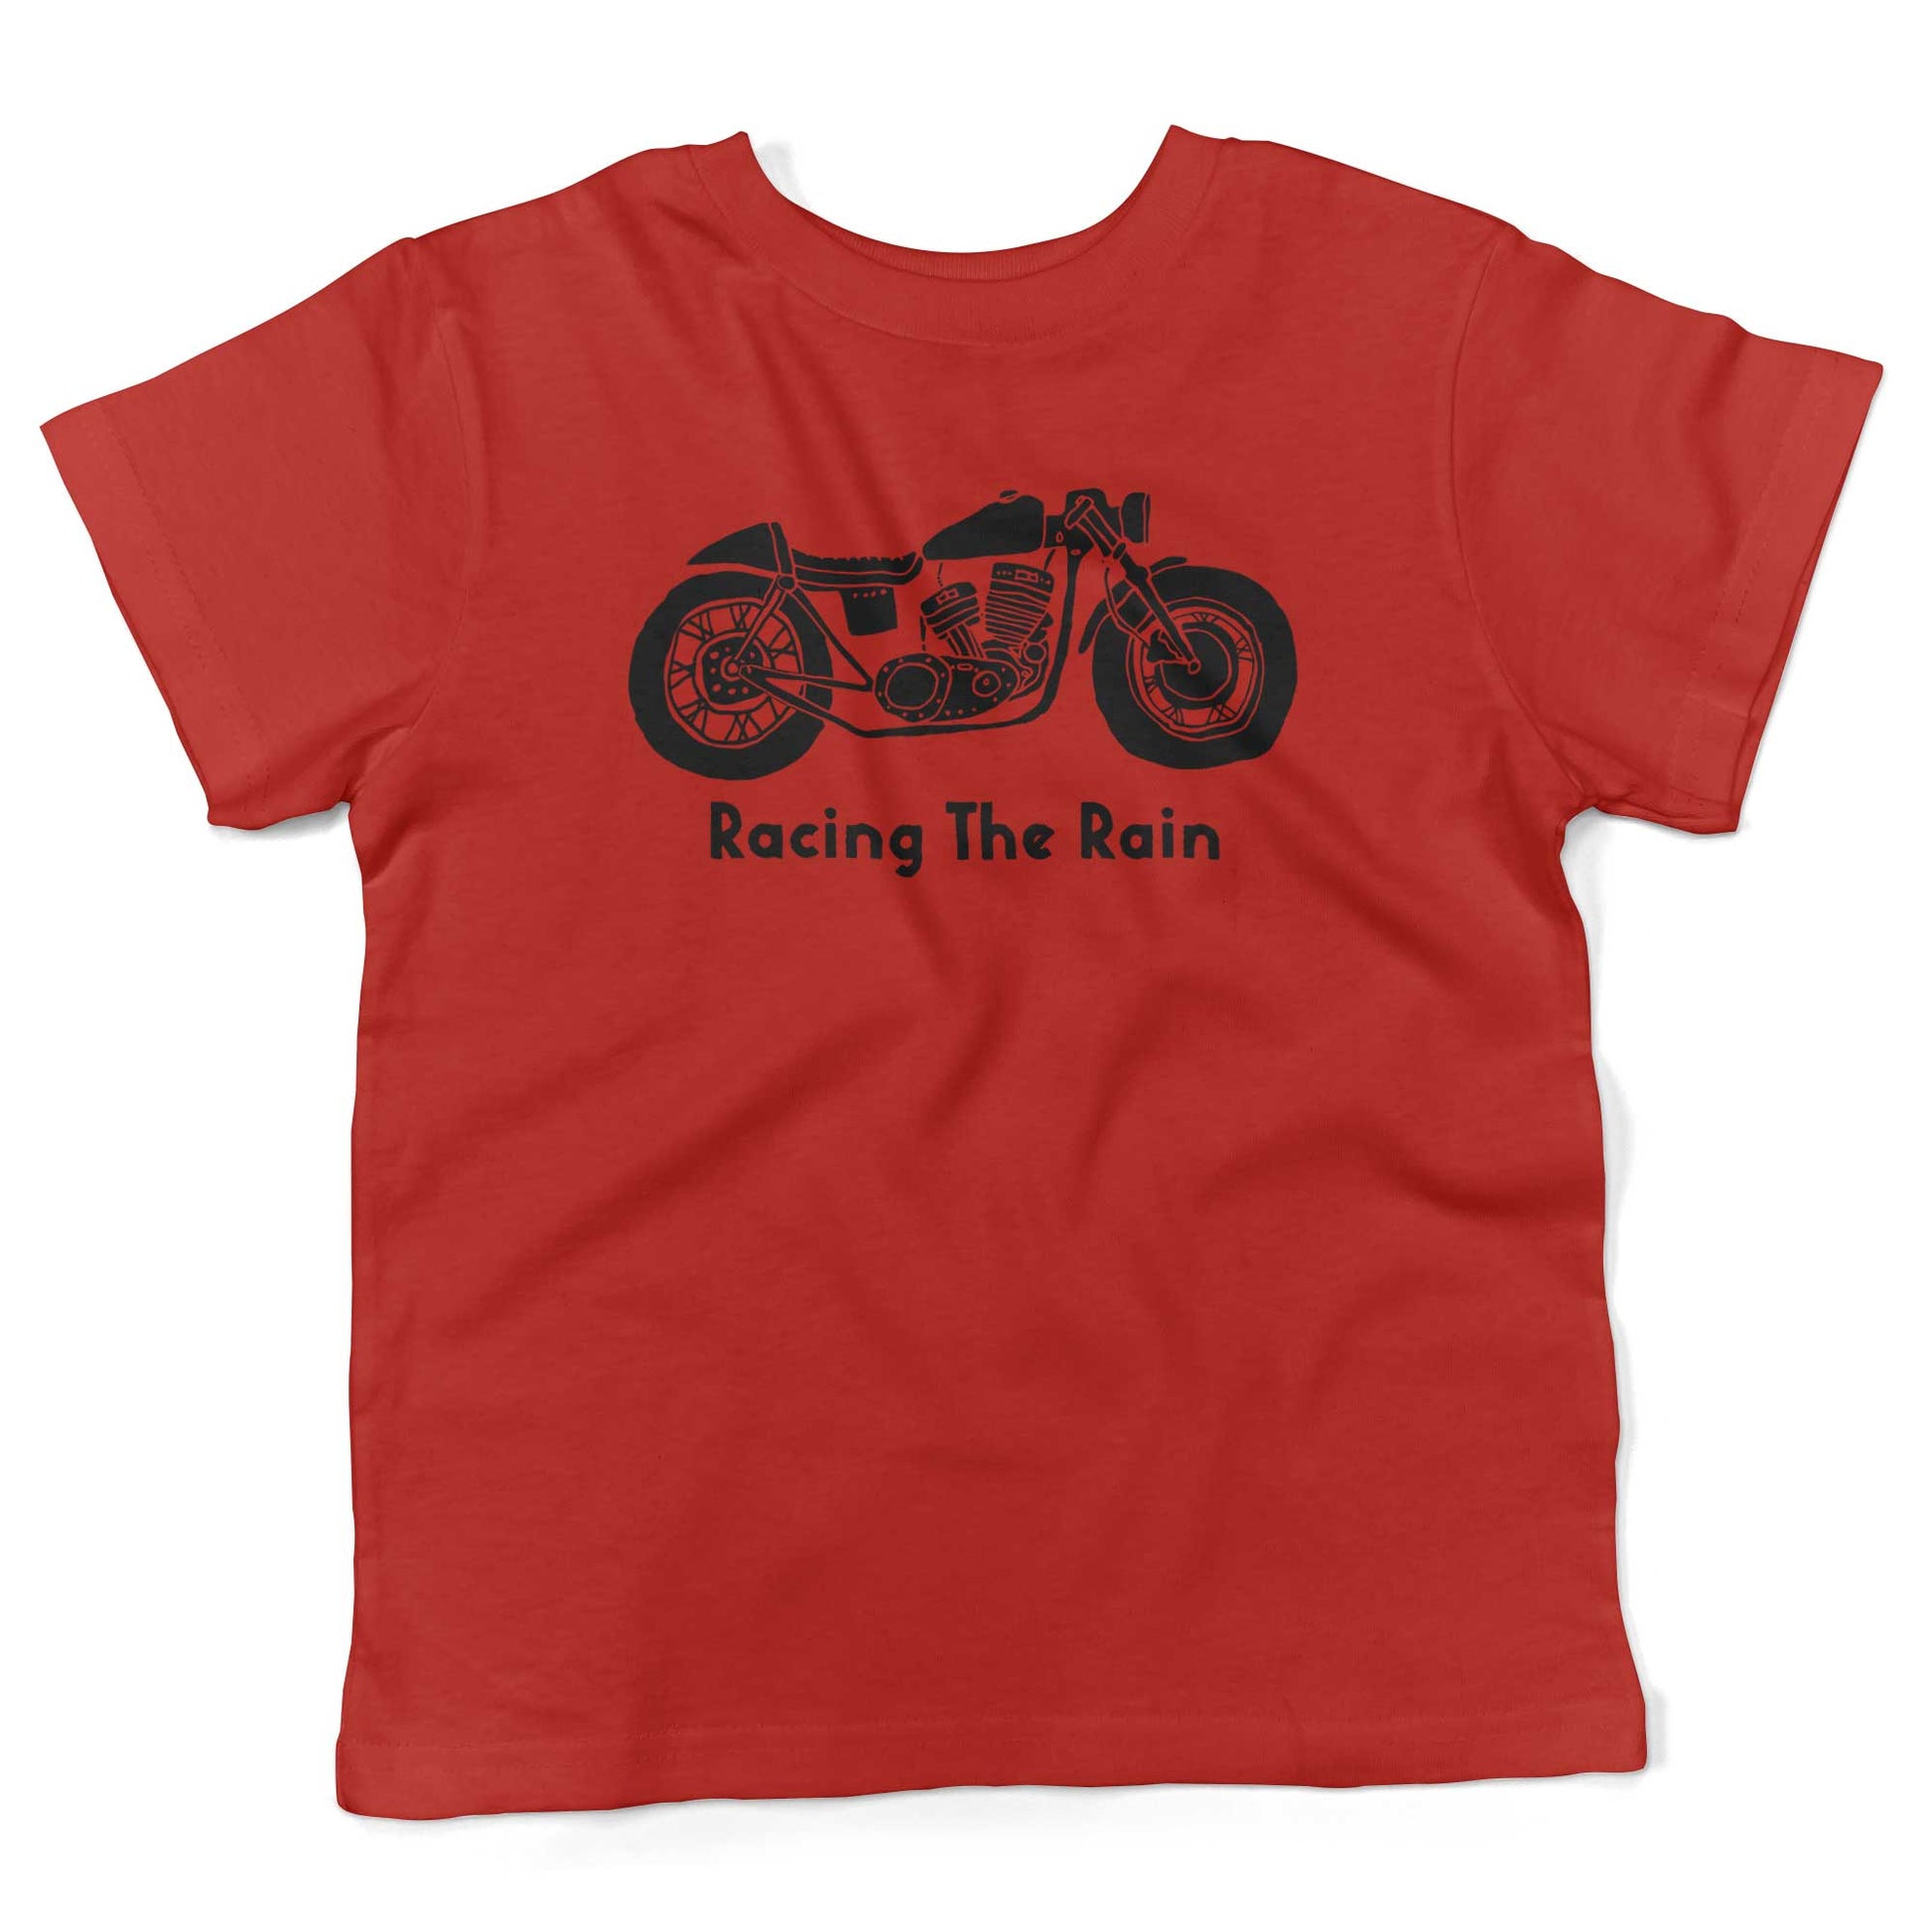 Racing The Rain Toddler Shirt-Red-2T